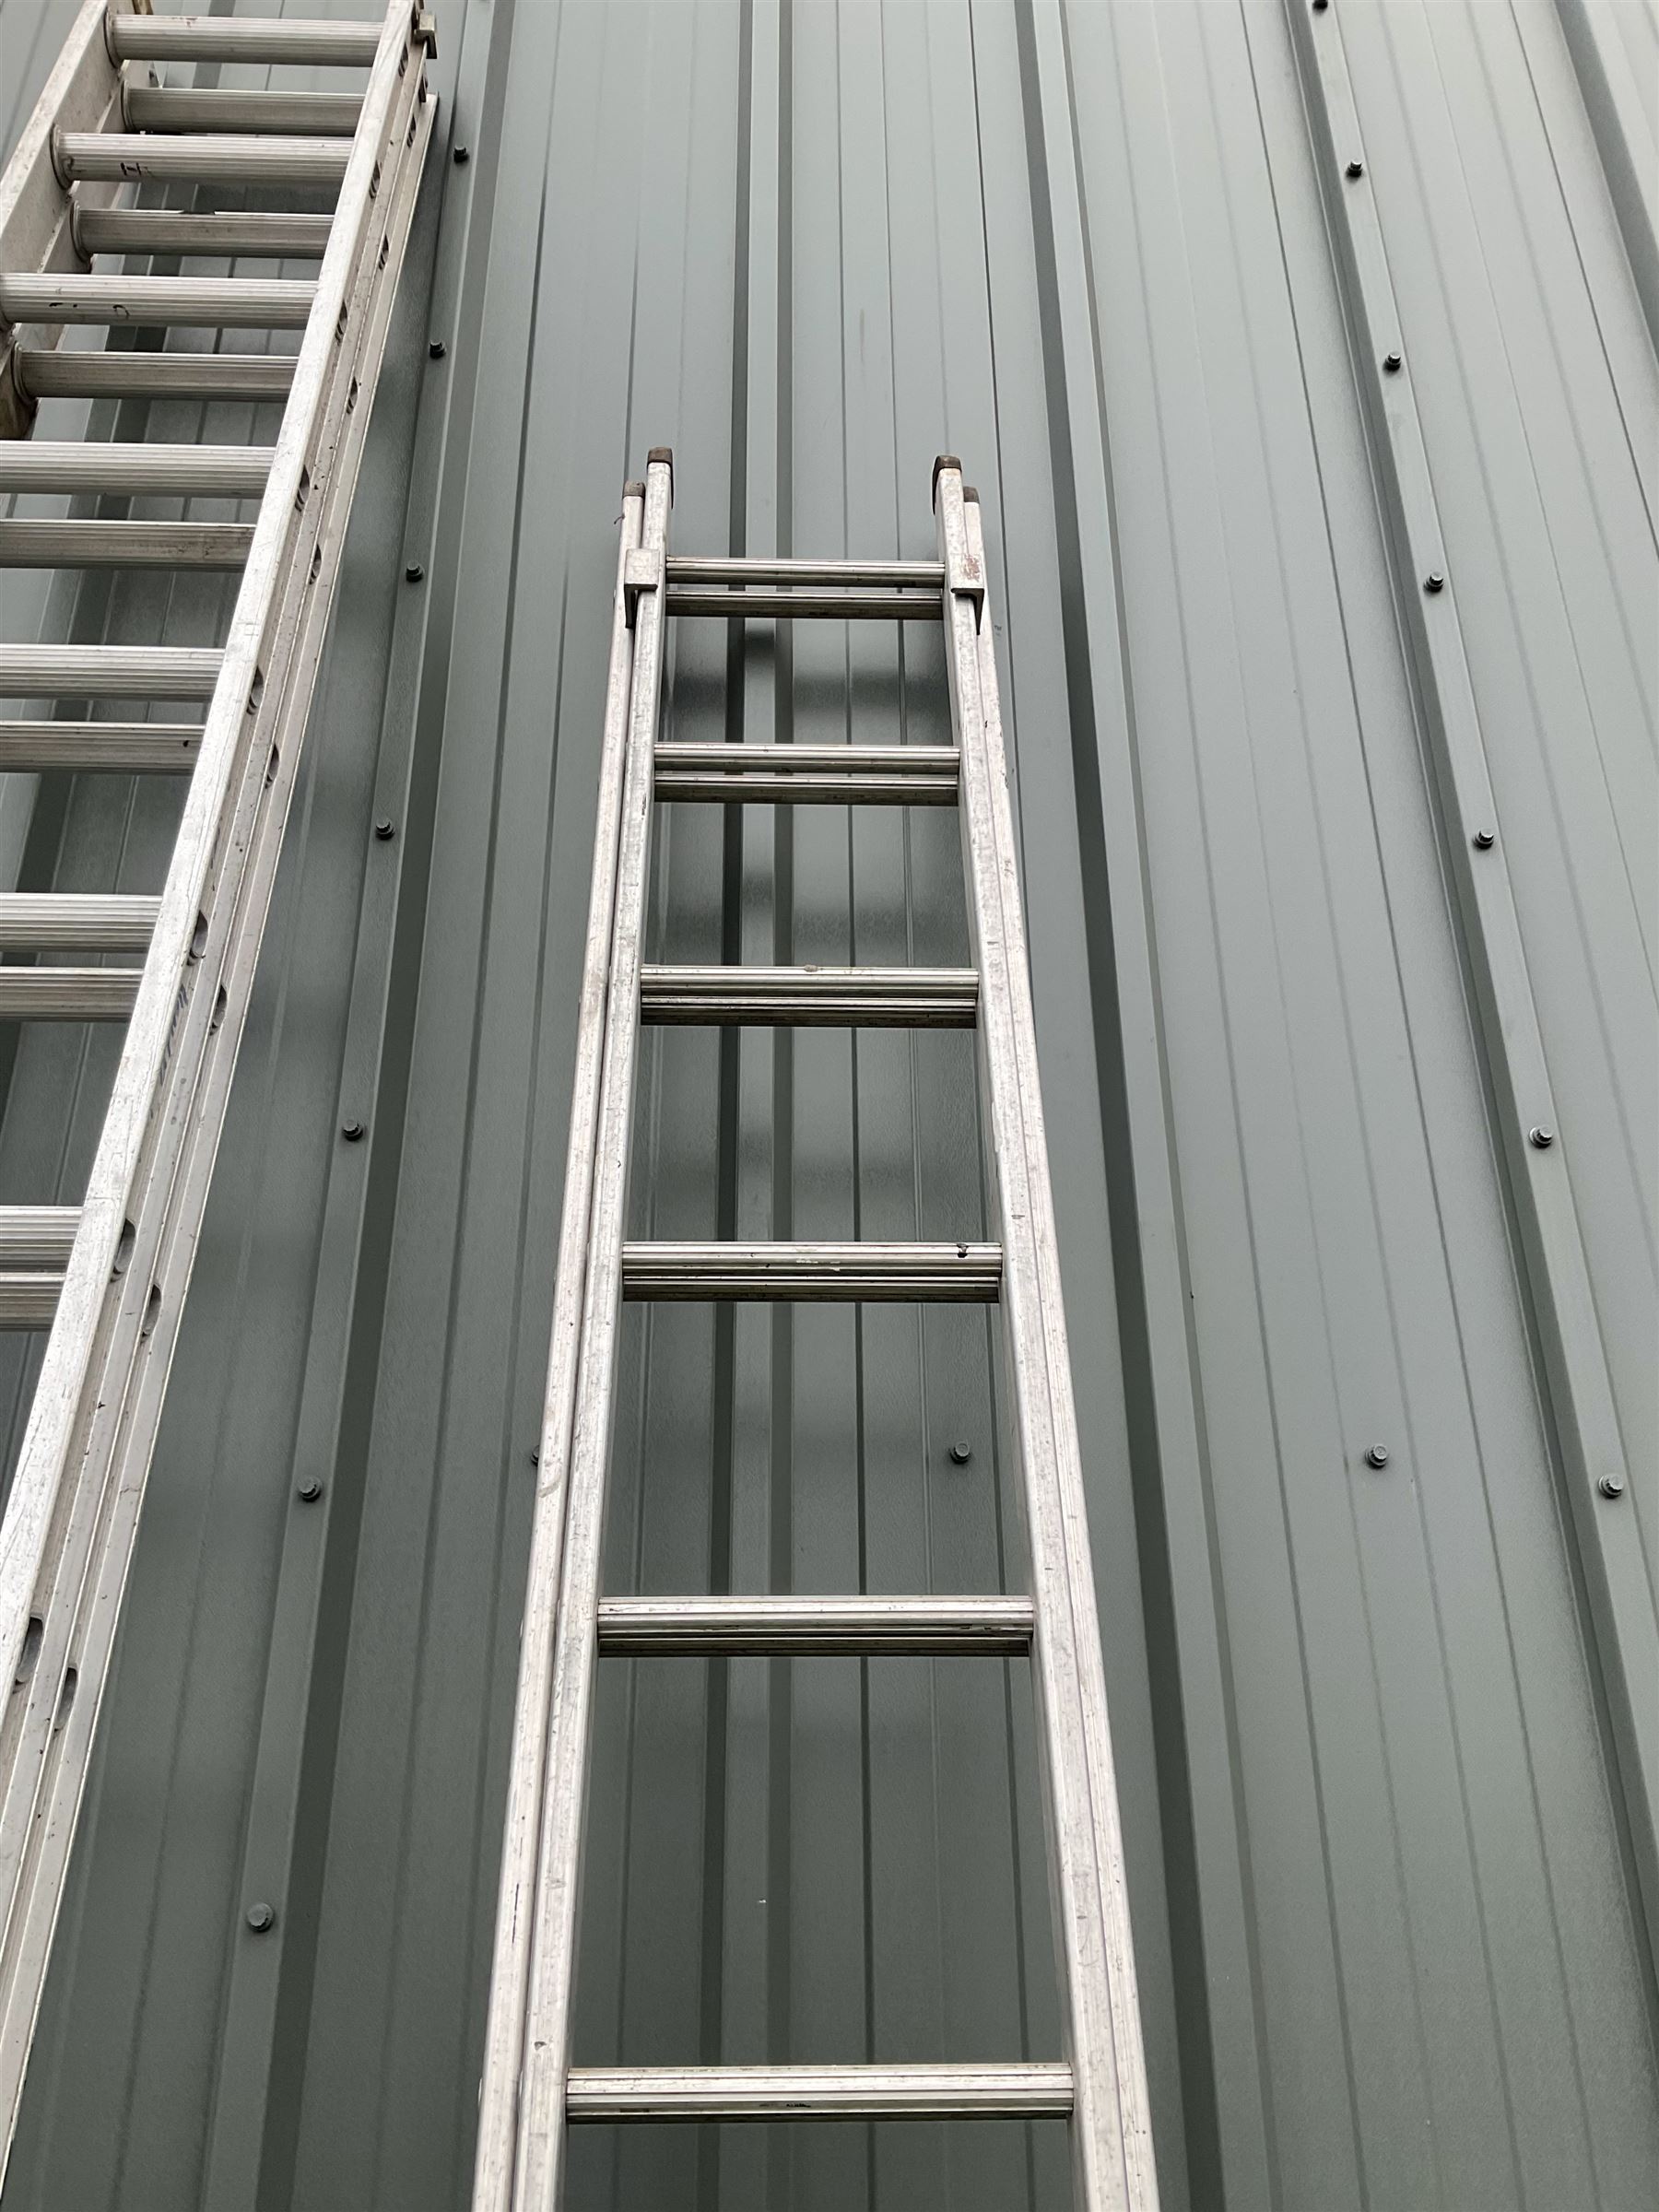 Aluminium extending ladders (4m closed) with another aluminium ladders (330cm closed) - Image 5 of 5